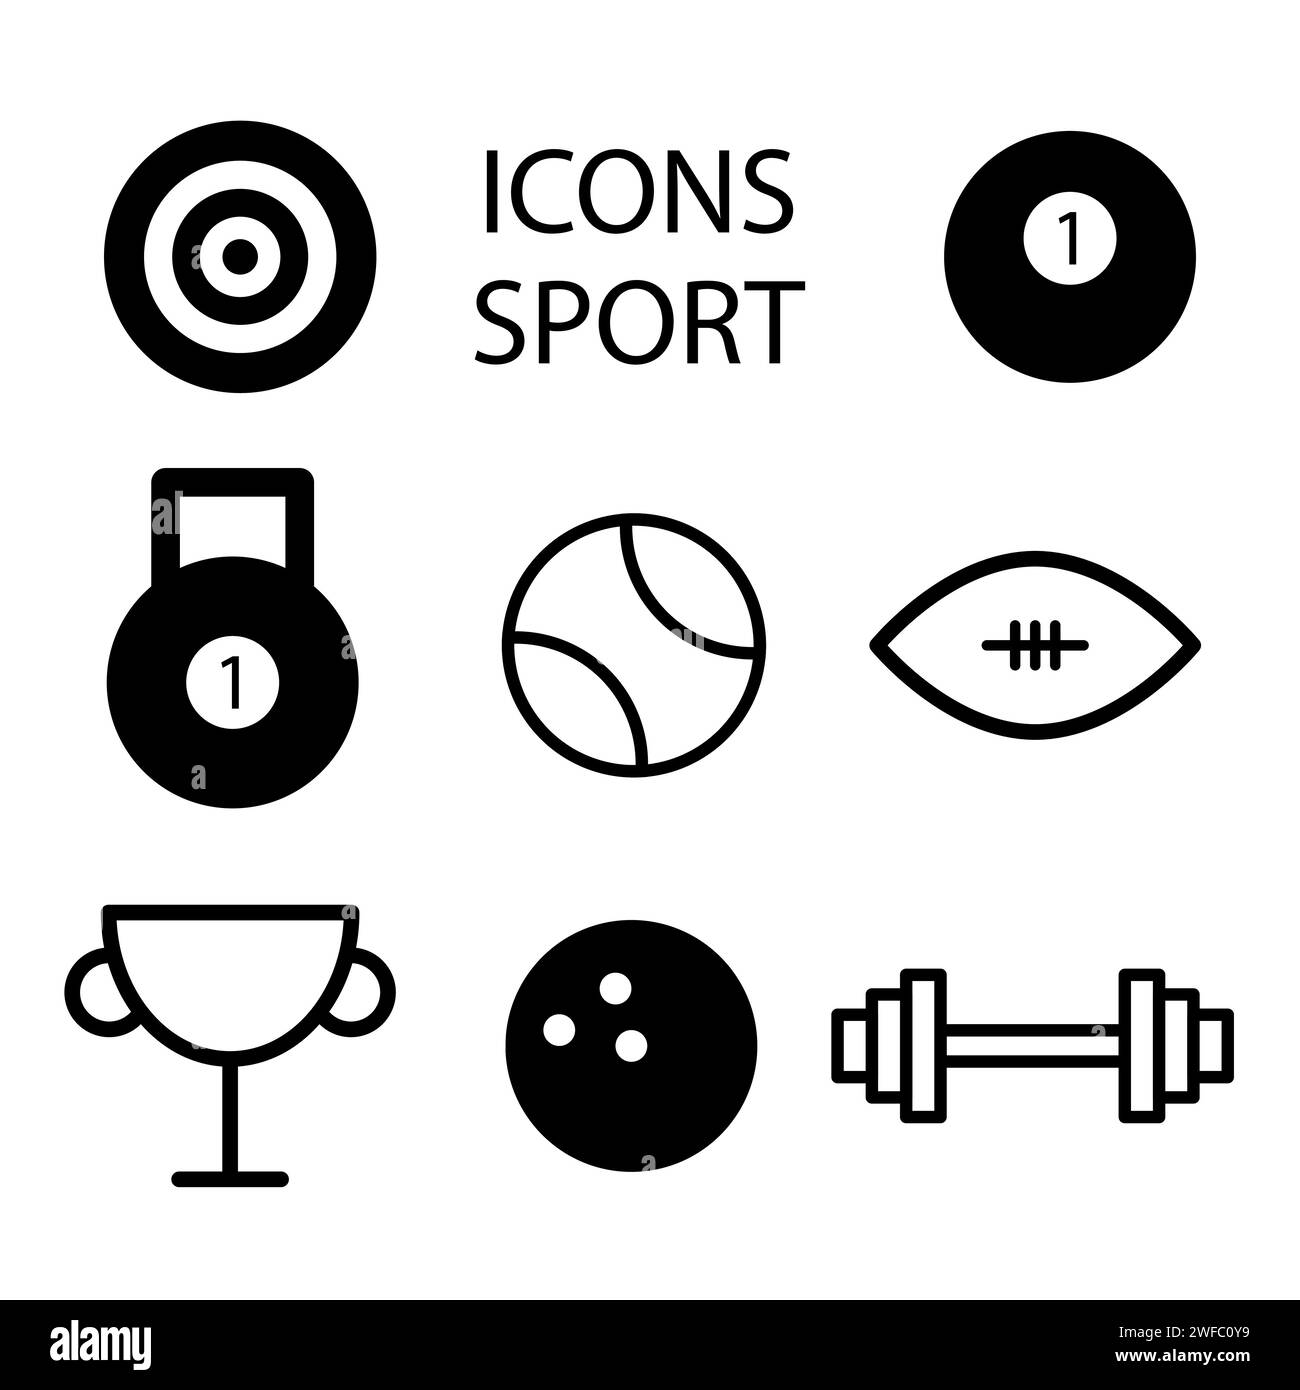 Flat sports icons. Line art. Vector illustration. Stock image. EPS 10. Stock Vector